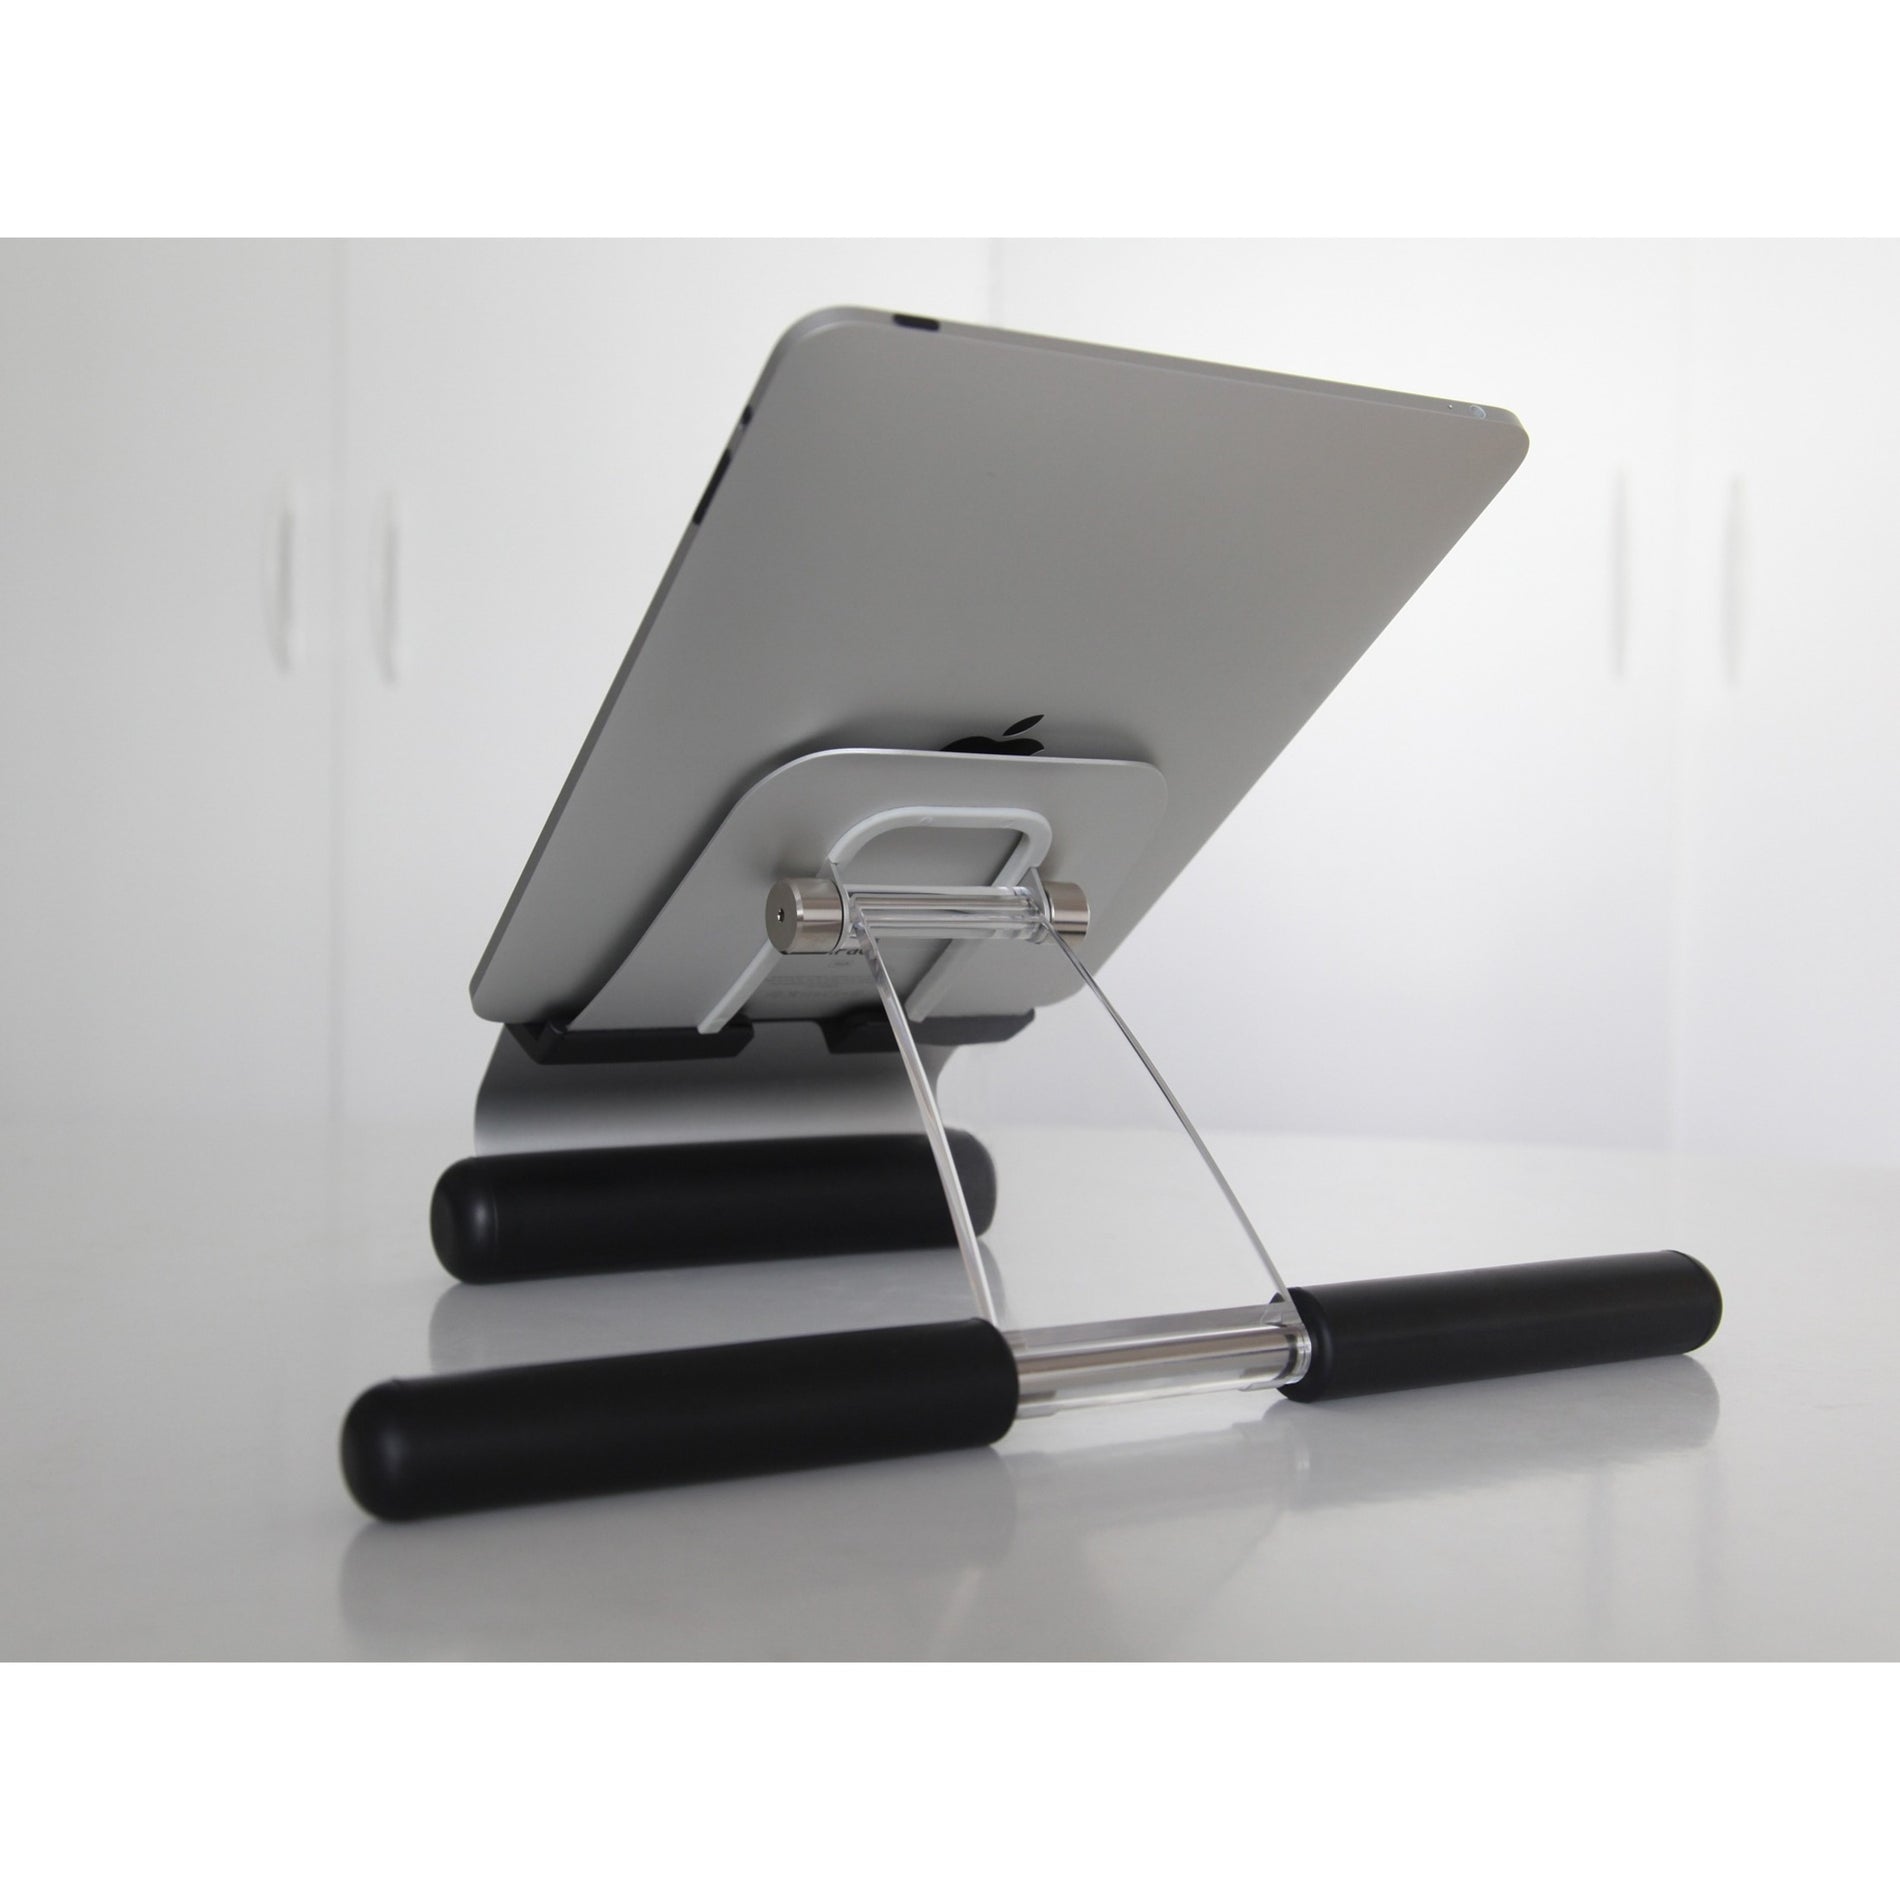 Rain Design 10035 iRest lap stand for iPad/Tablet, Adjustable Tilt, Portable, Silver